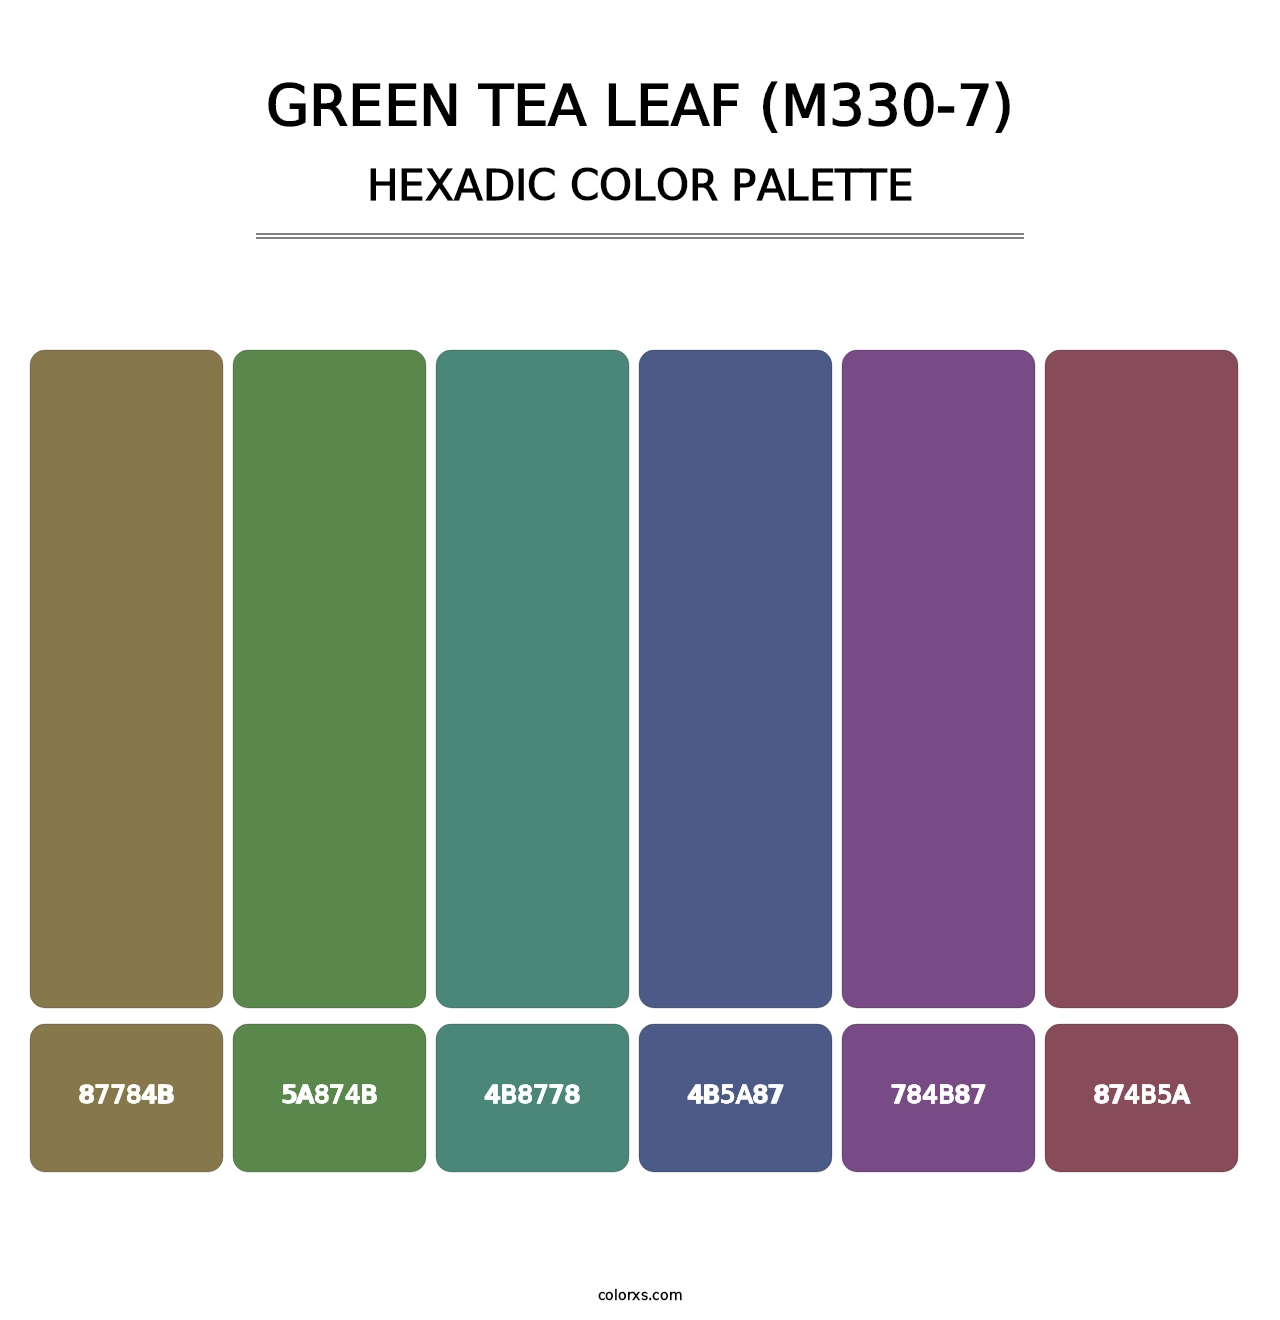 Green Tea Leaf (M330-7) - Hexadic Color Palette